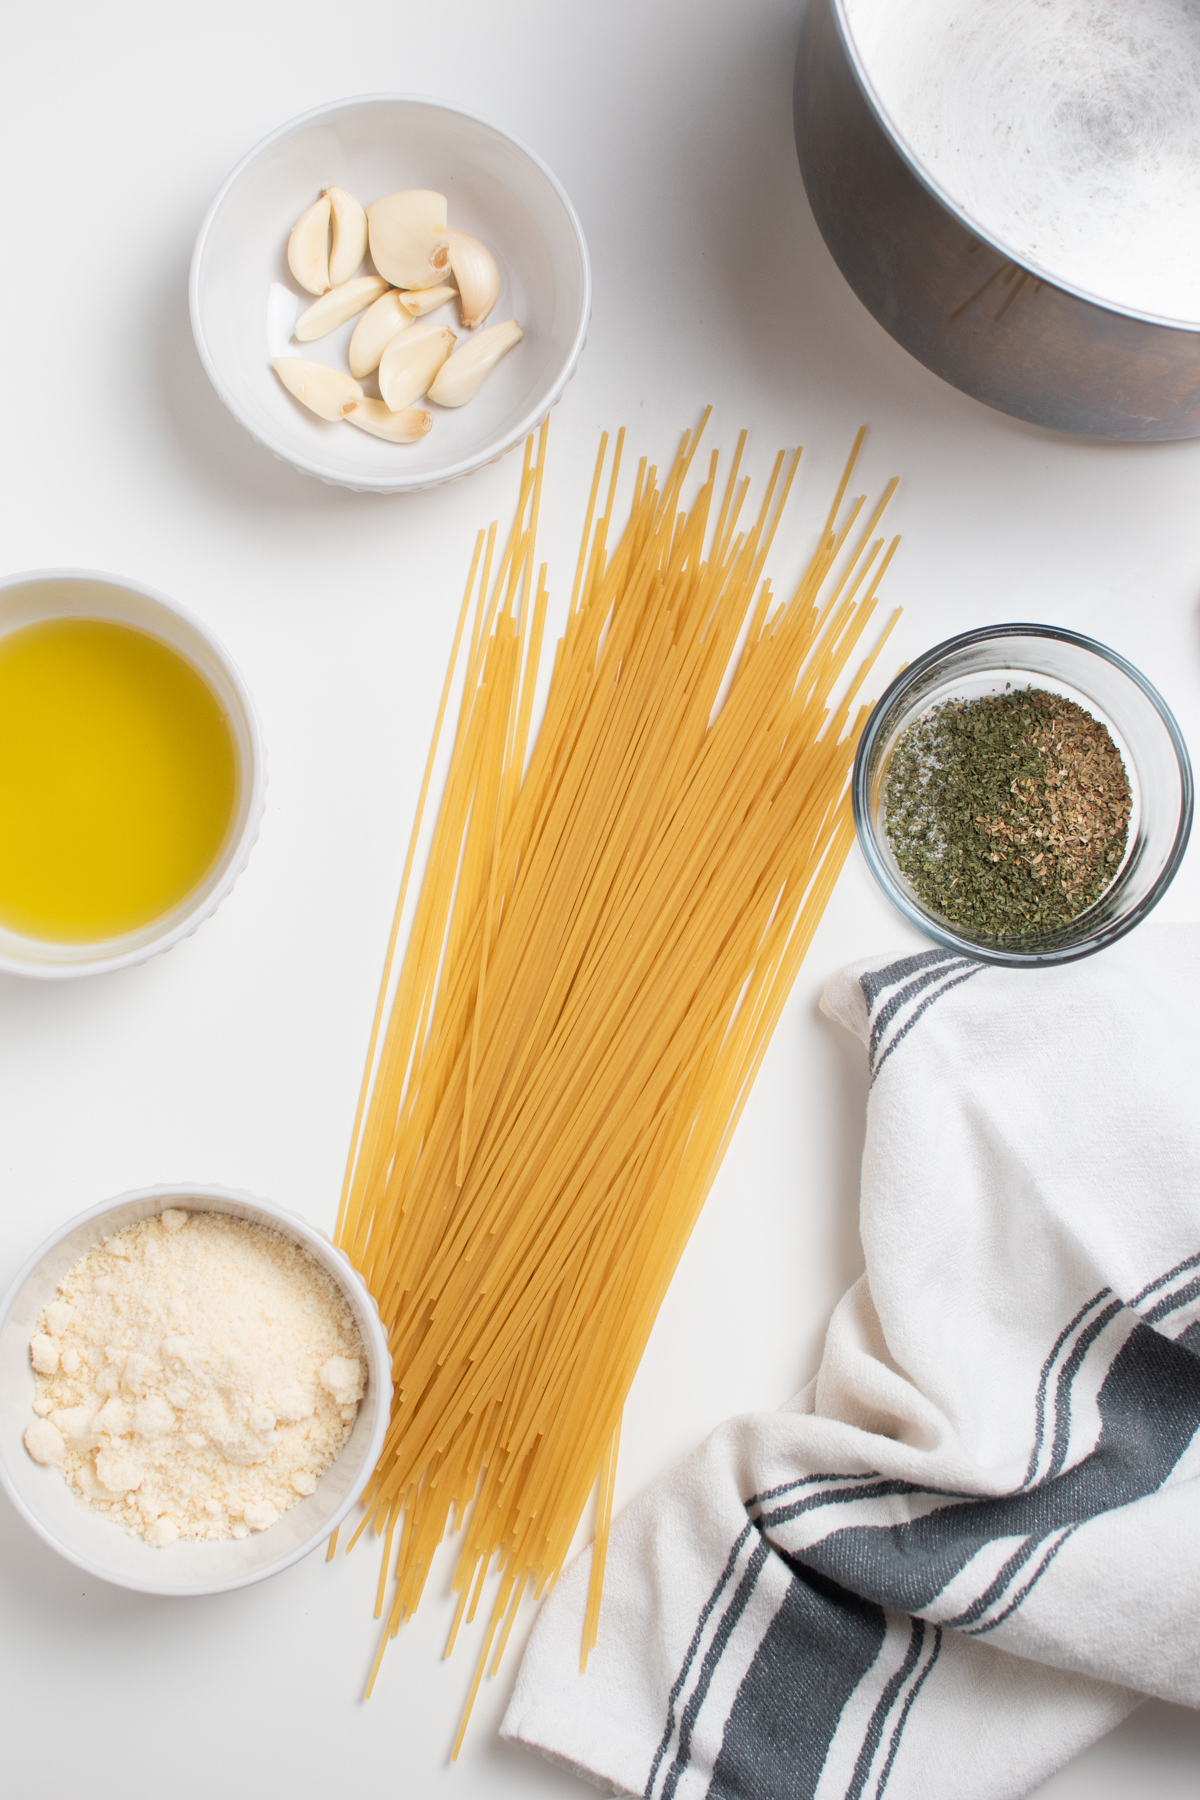 Garlic spaghetti ingredients including dry pasta, garlic, Italian seasoning, parmesan and oil.